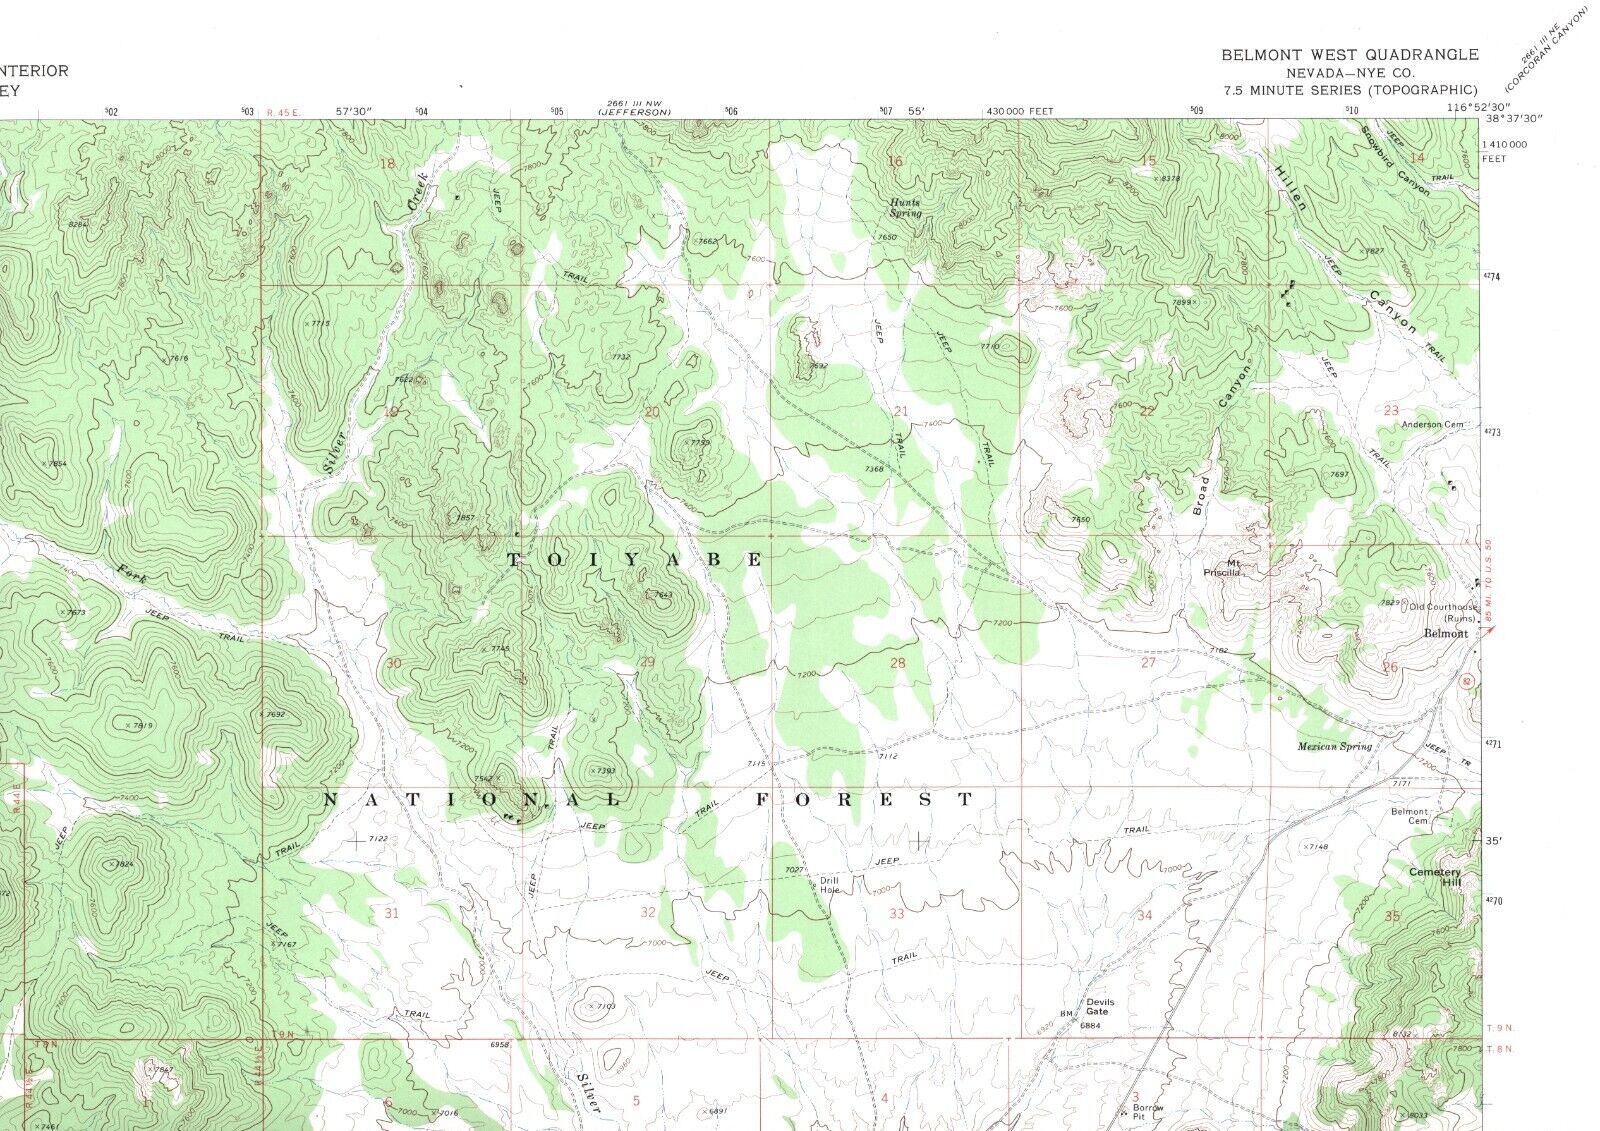 Belmont West, Nevada 1971 Vintage USGS Map 7.5 Quadrangle Topographic